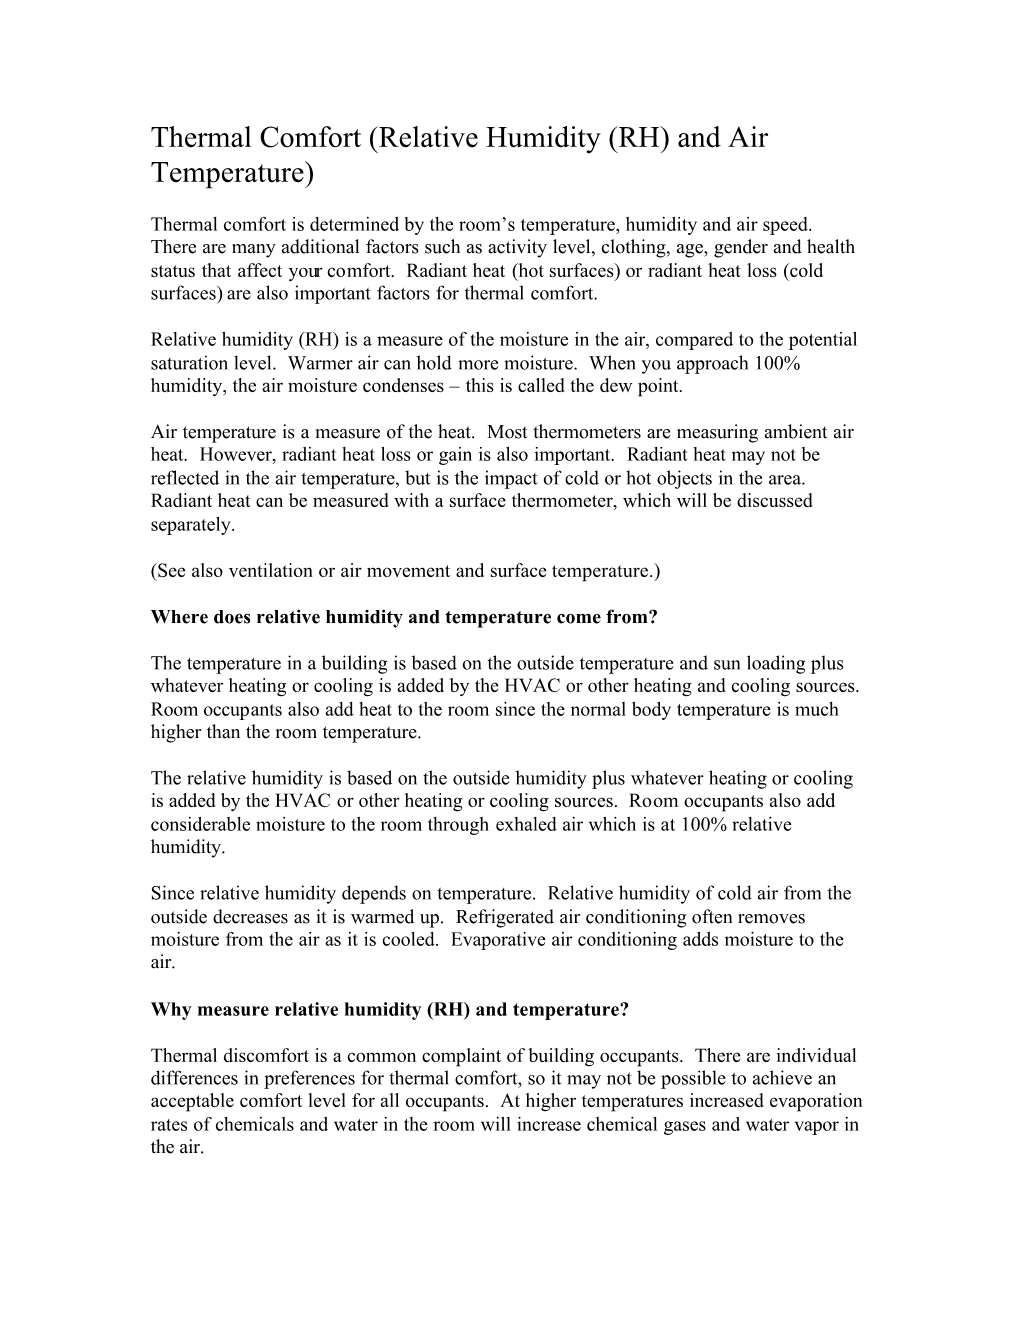 Thermal Comfort (Relative Humidity (RH) and Air Temperature)